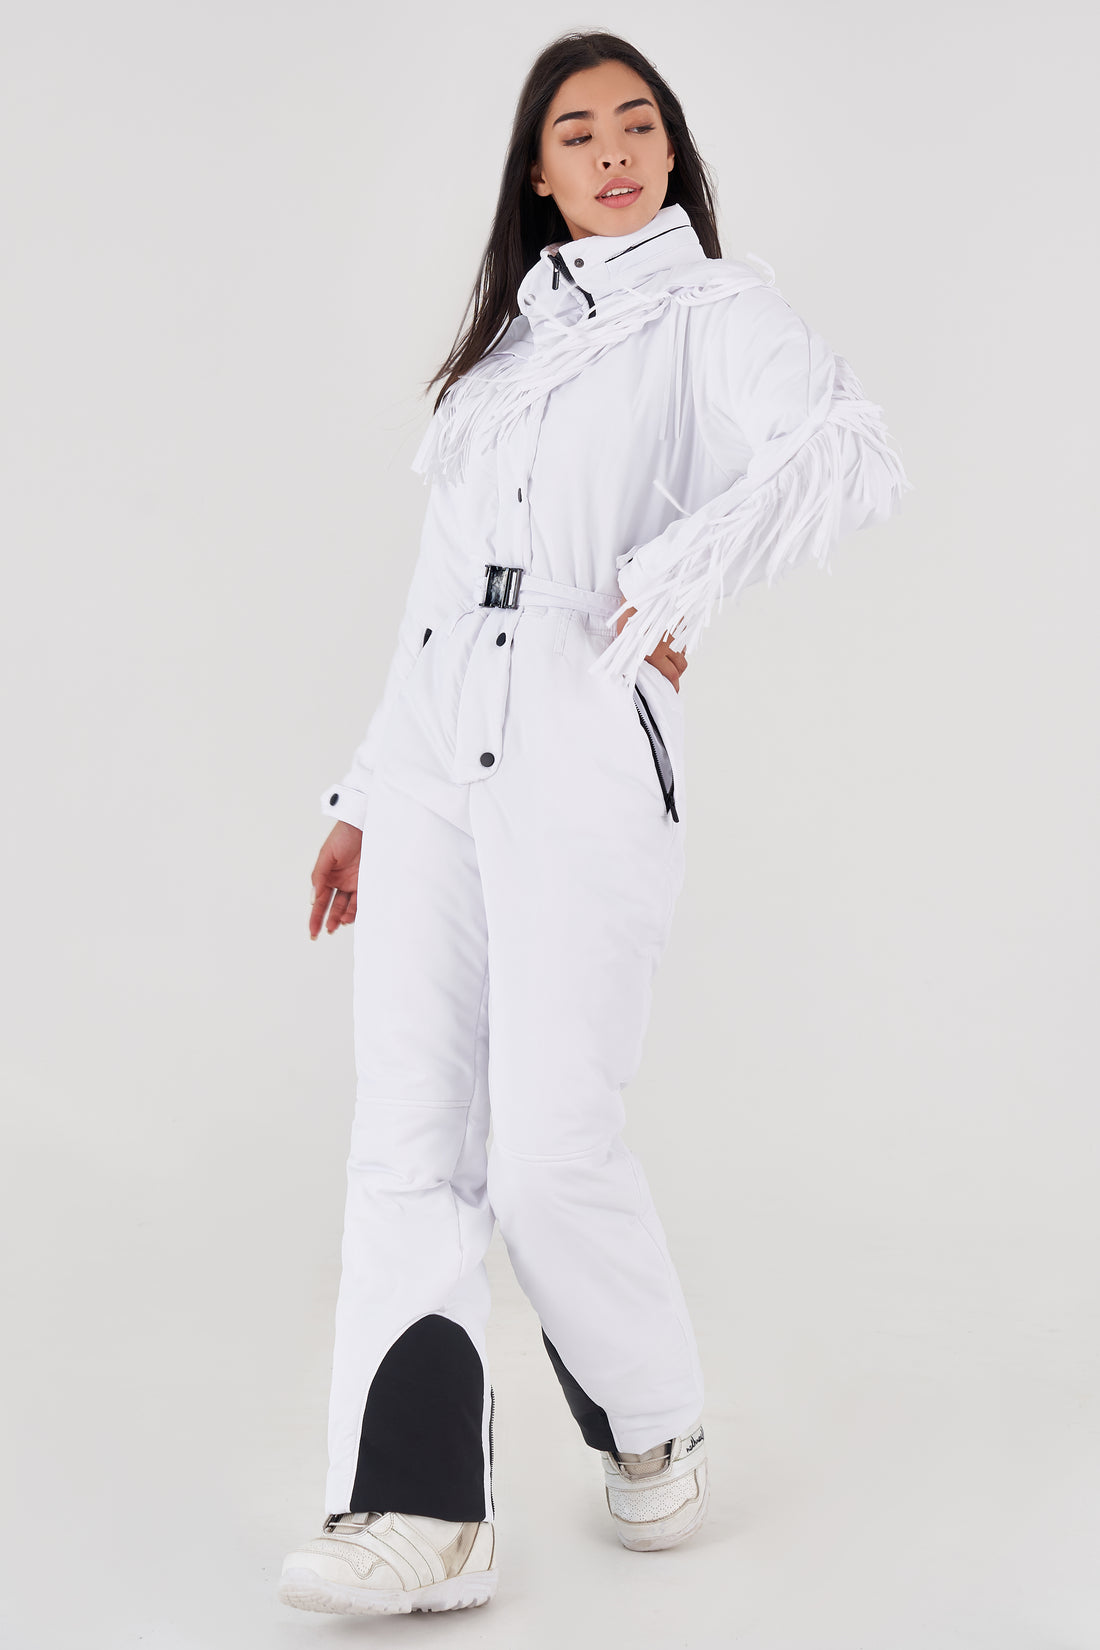 Ski suit stylish - BONA - WHITE fringe - Snowsuit with tassels for winter sport